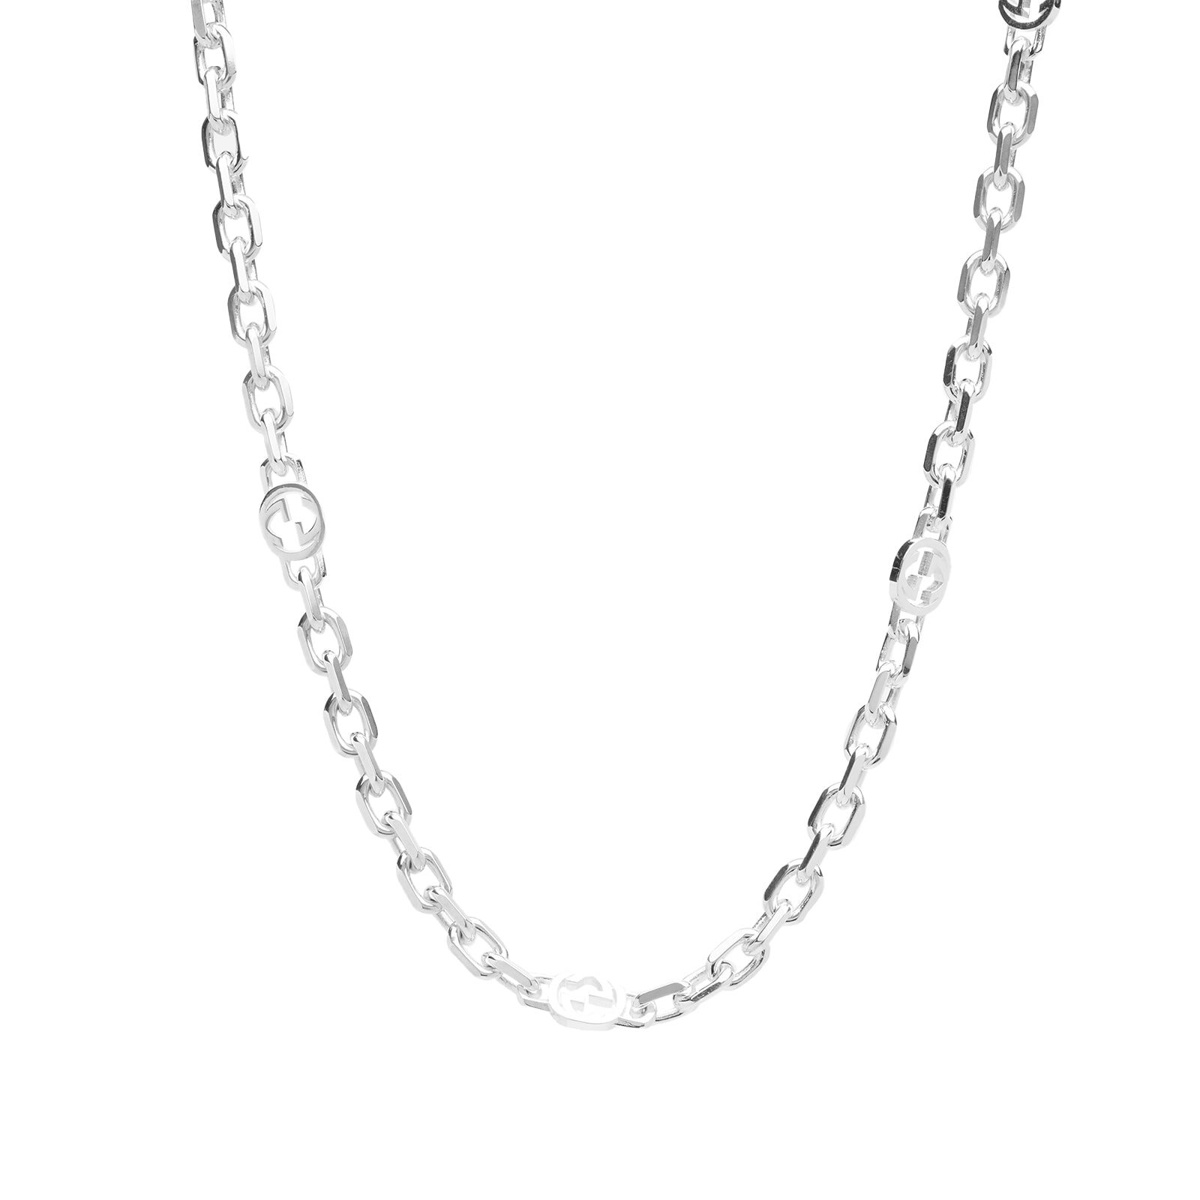 Gucci Men's Interlocking G Chain Necklace in Sterling Silver Gucci